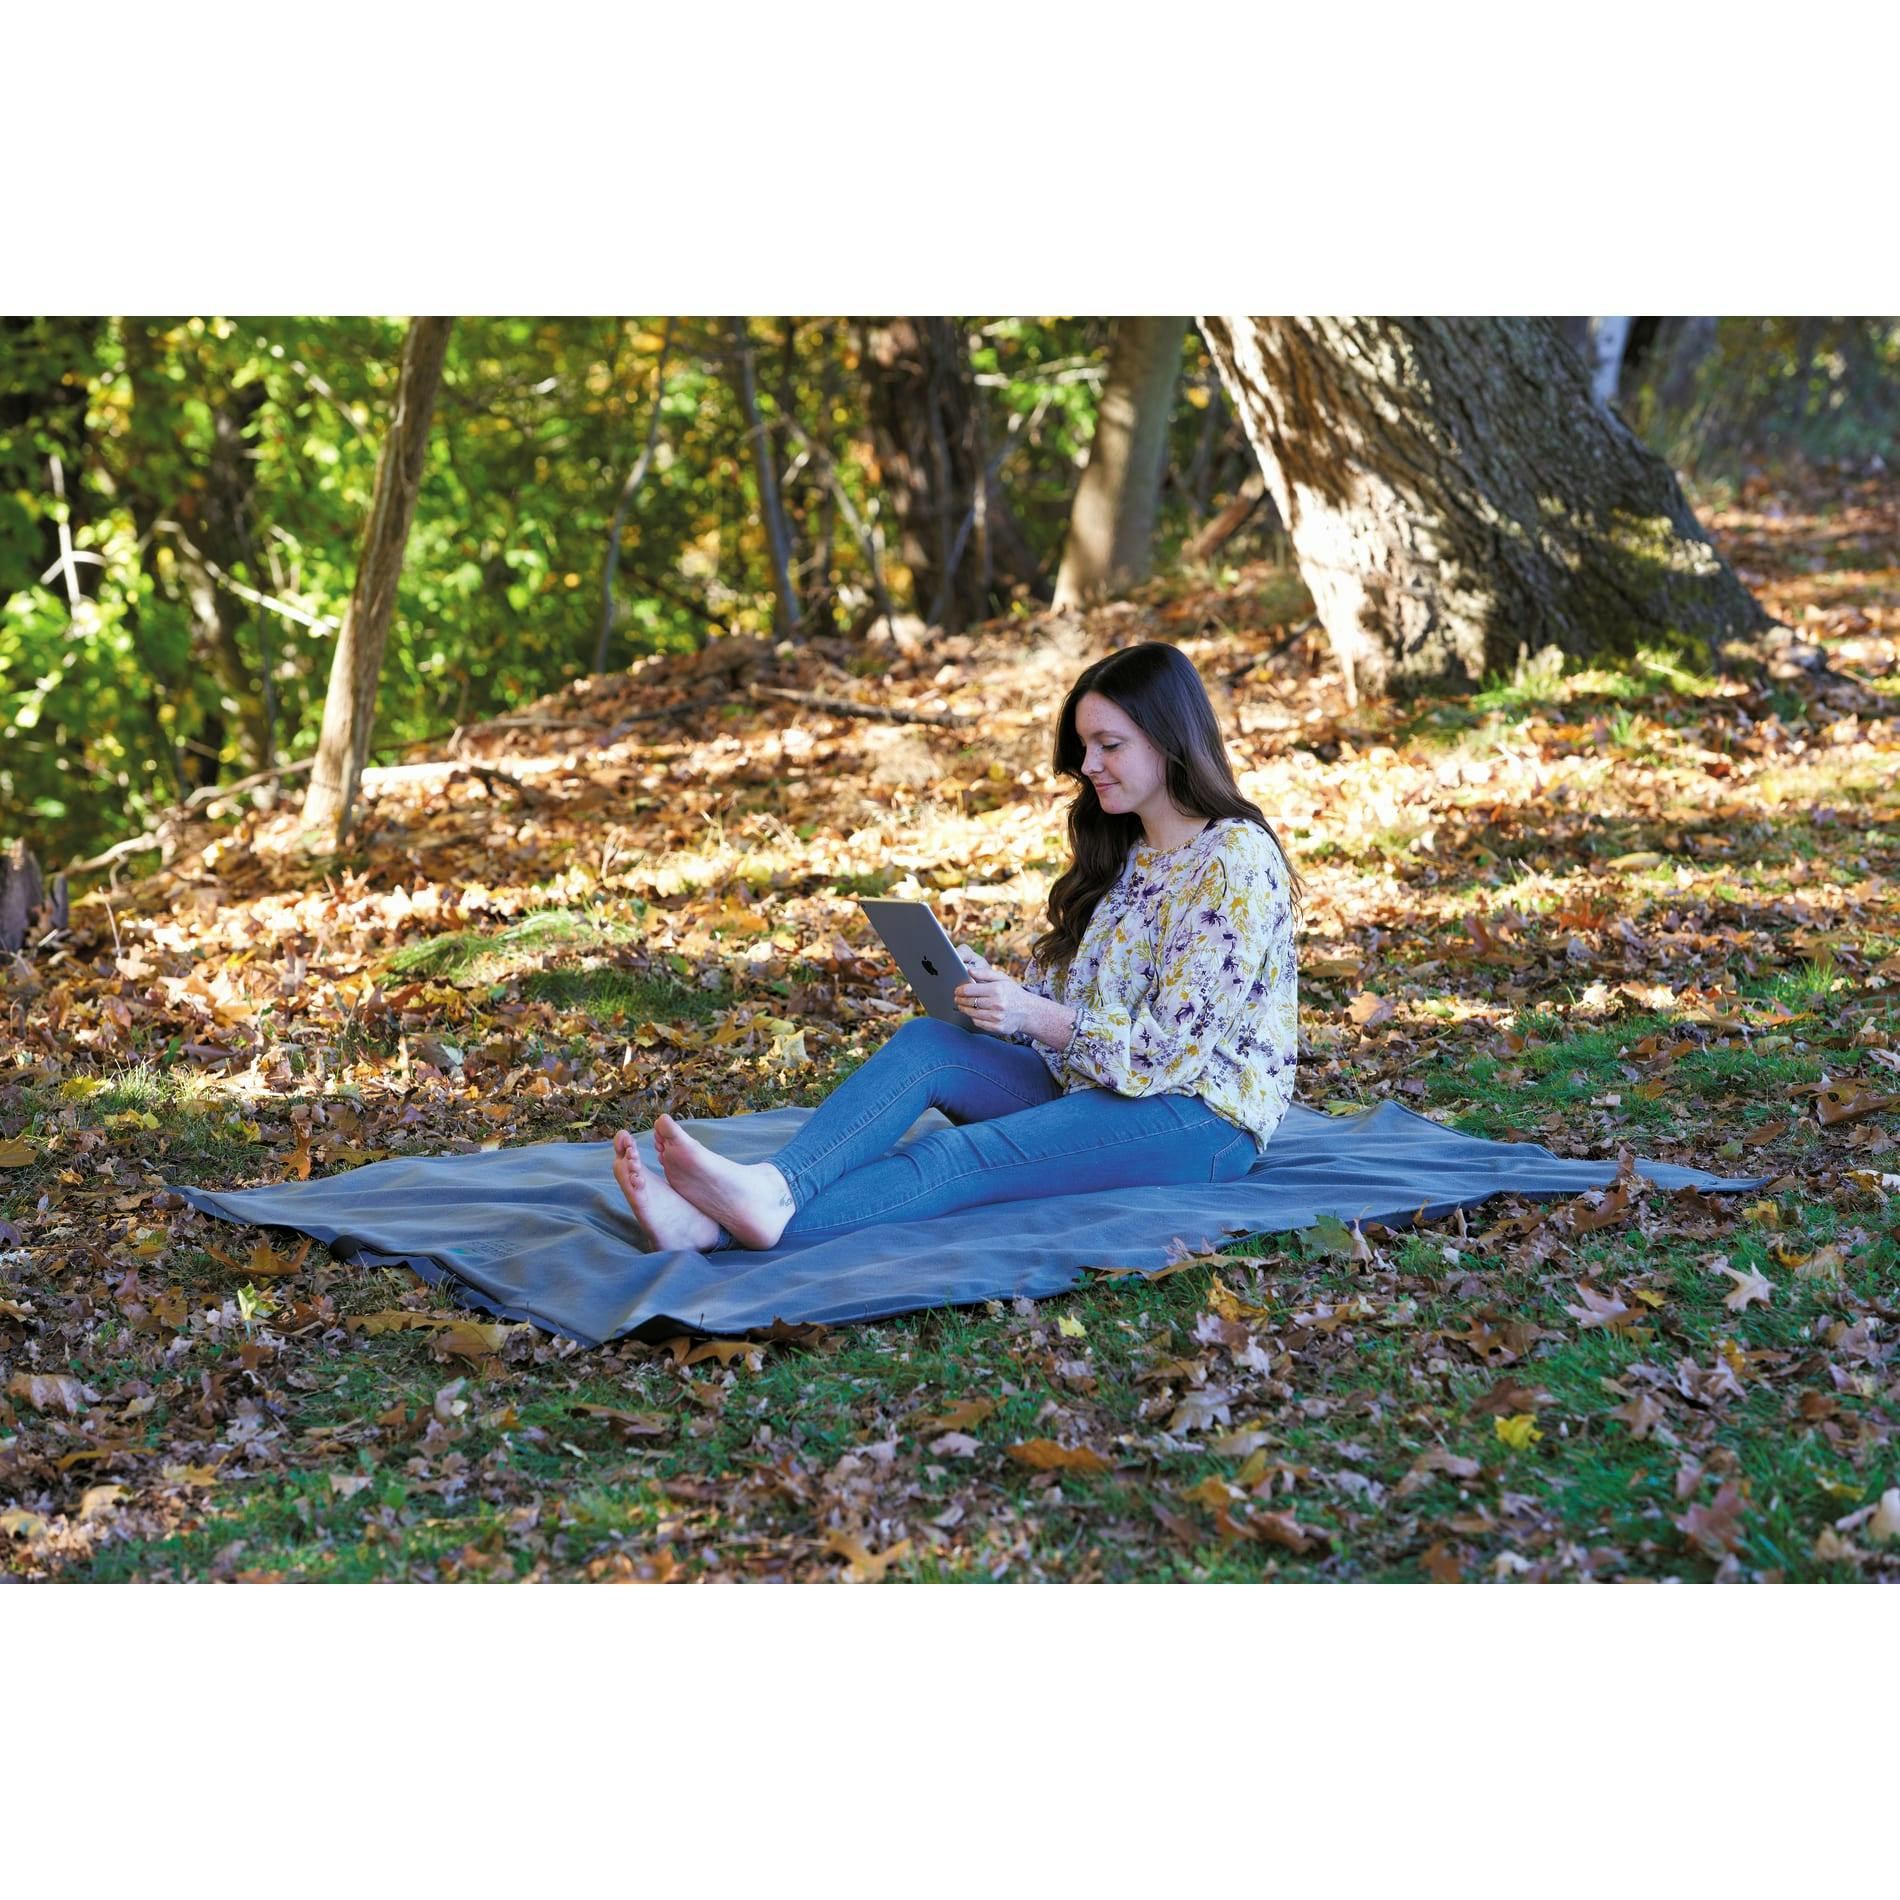 High Sierra® Oversize Picnic Blanket - additional Image 4